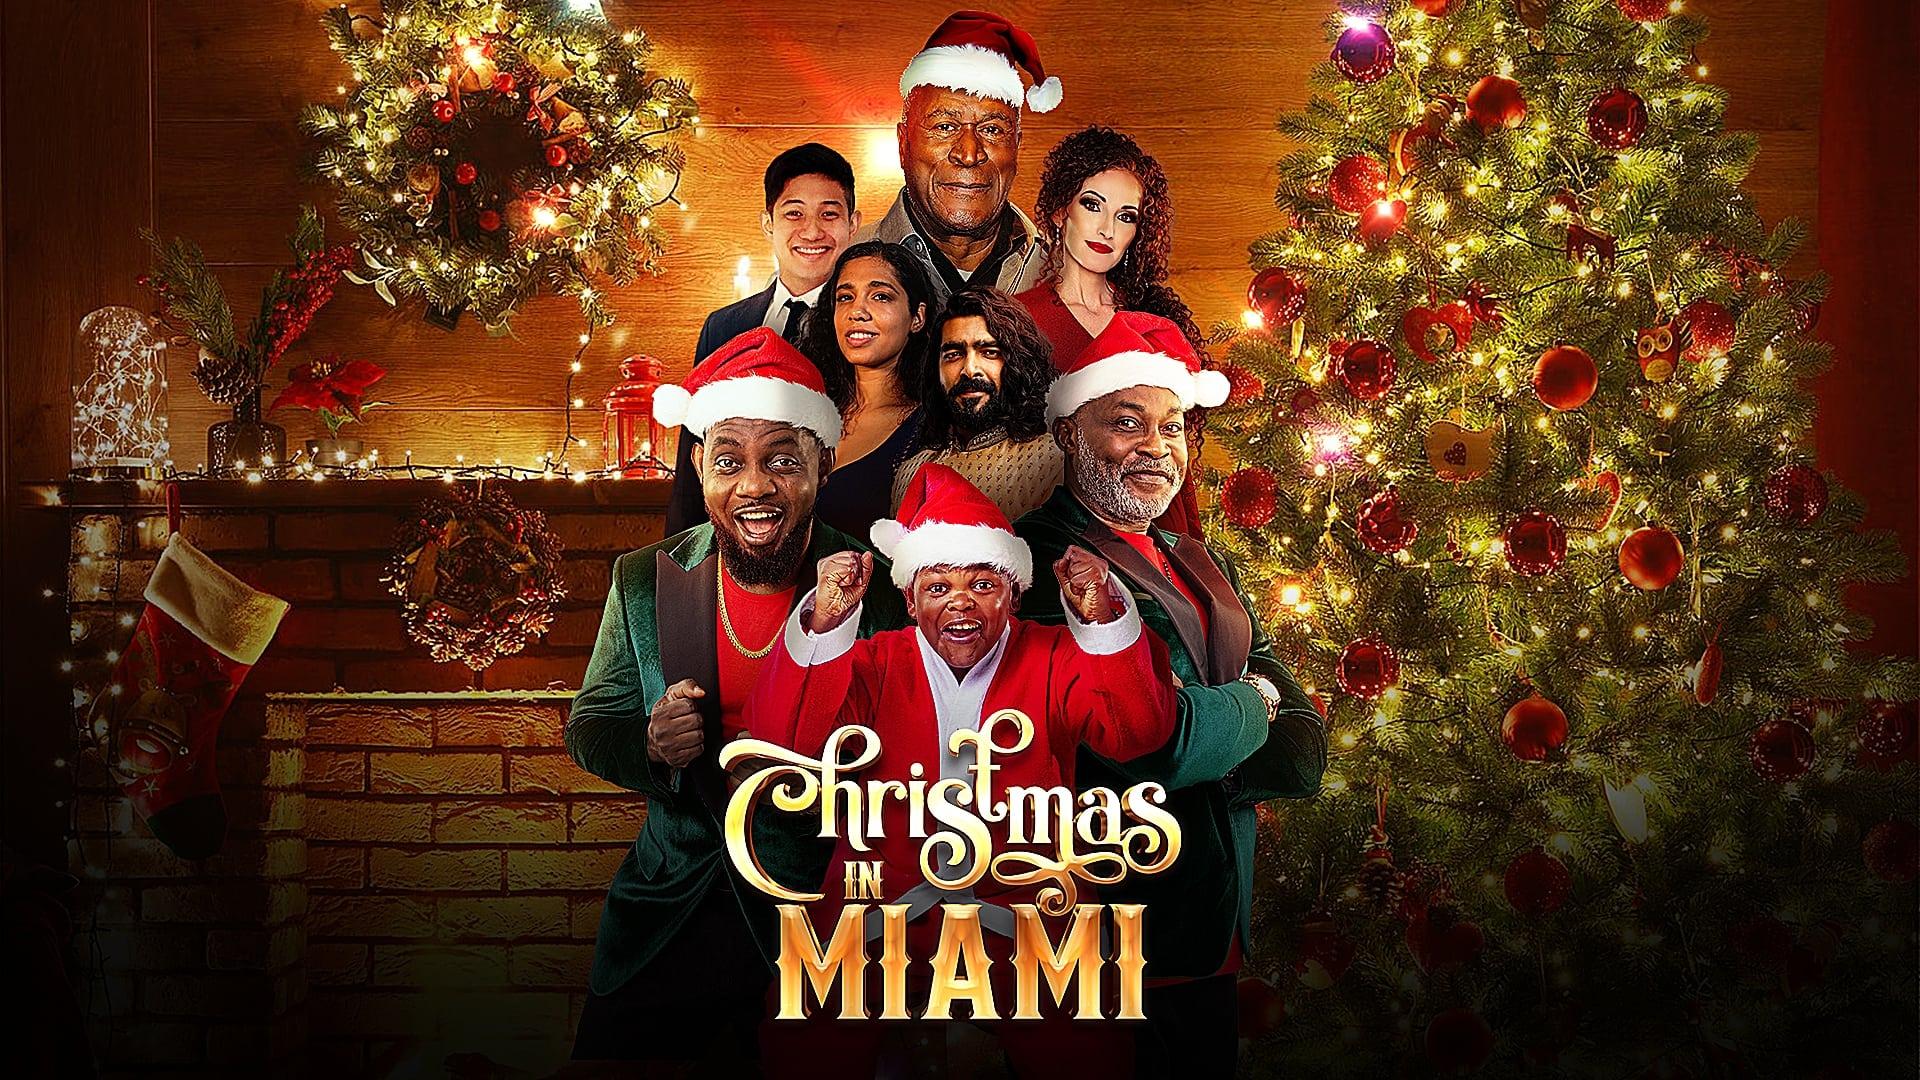 Christmas in Miami backdrop